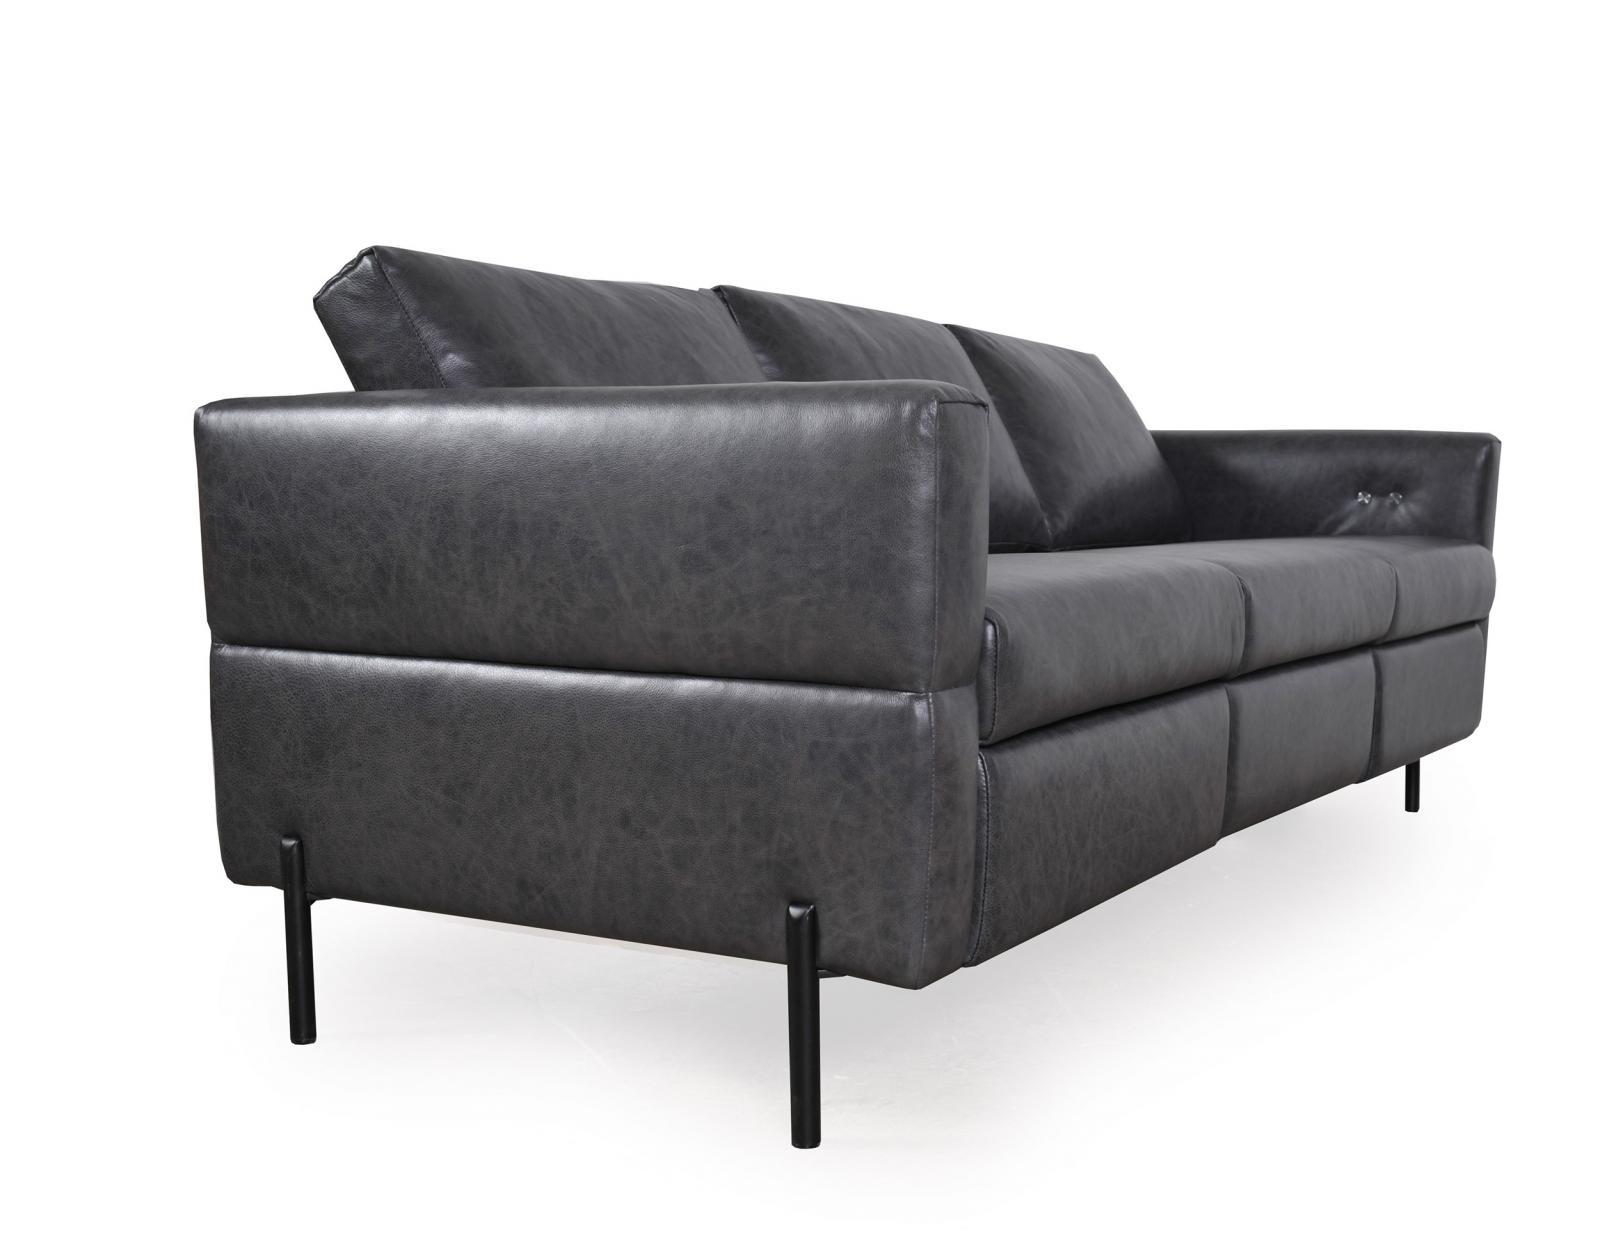 Contemporary, Modern Reclining Sofa Belvidera SKU: W001292771 in Charcoal Top grain leather